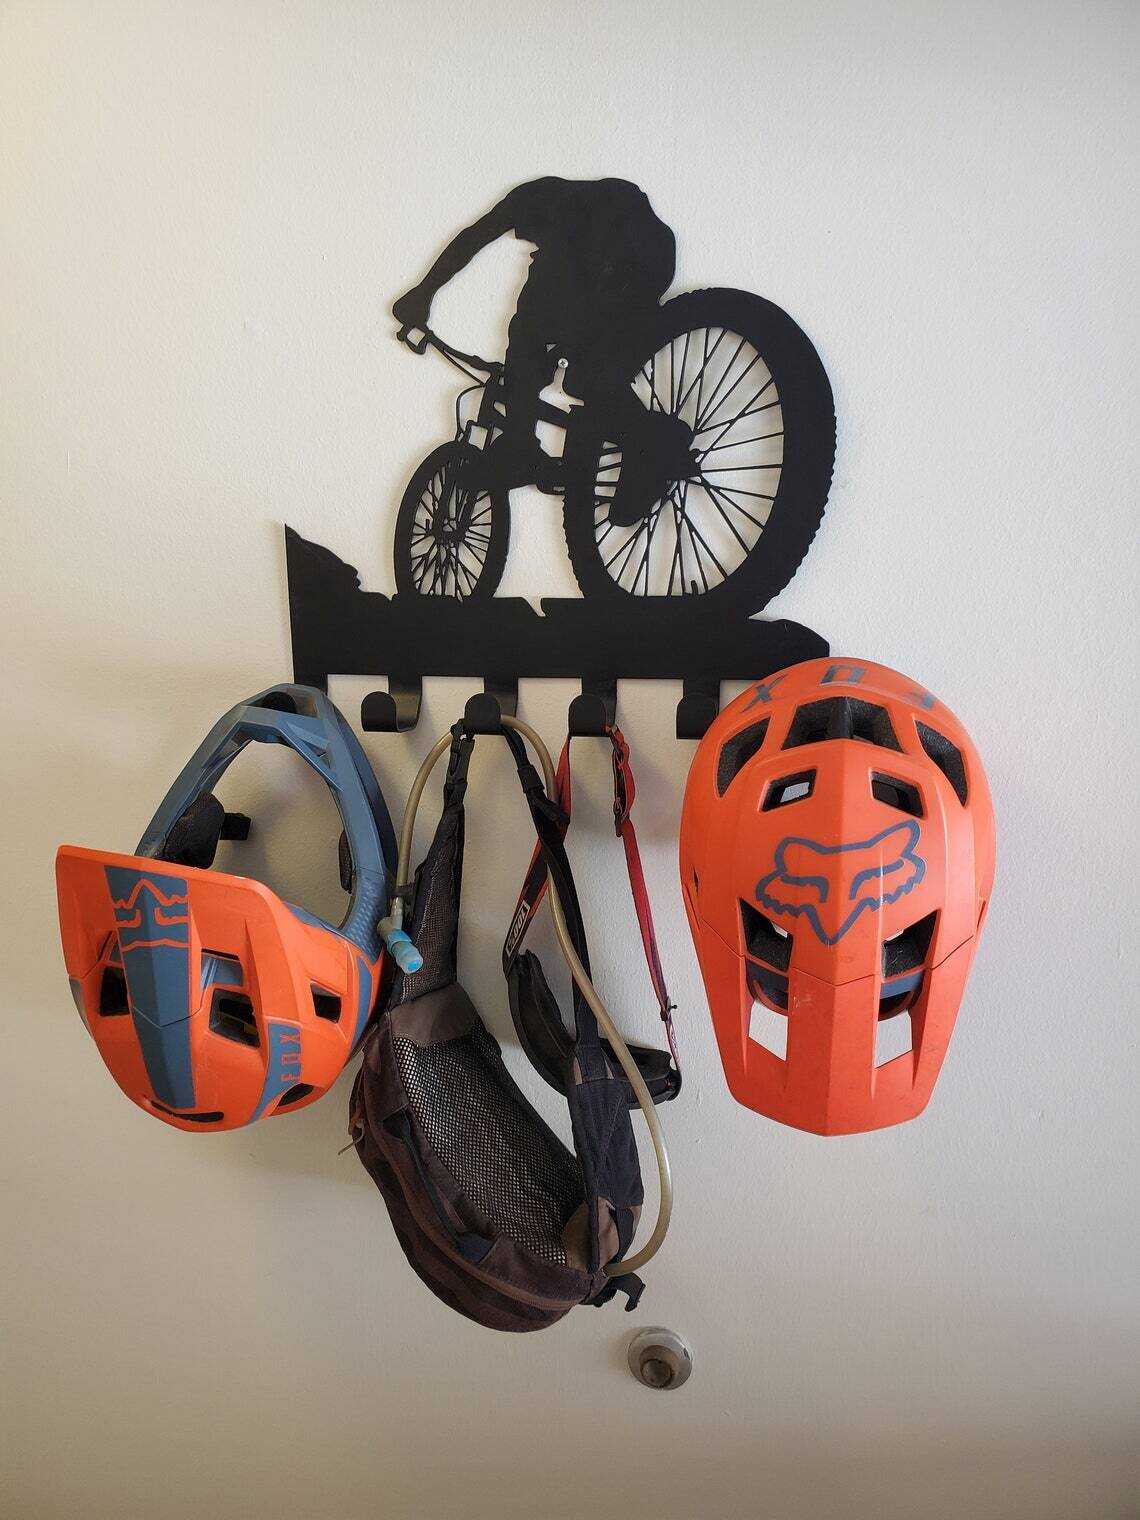 Mountain bike gear rack / metal wall decor